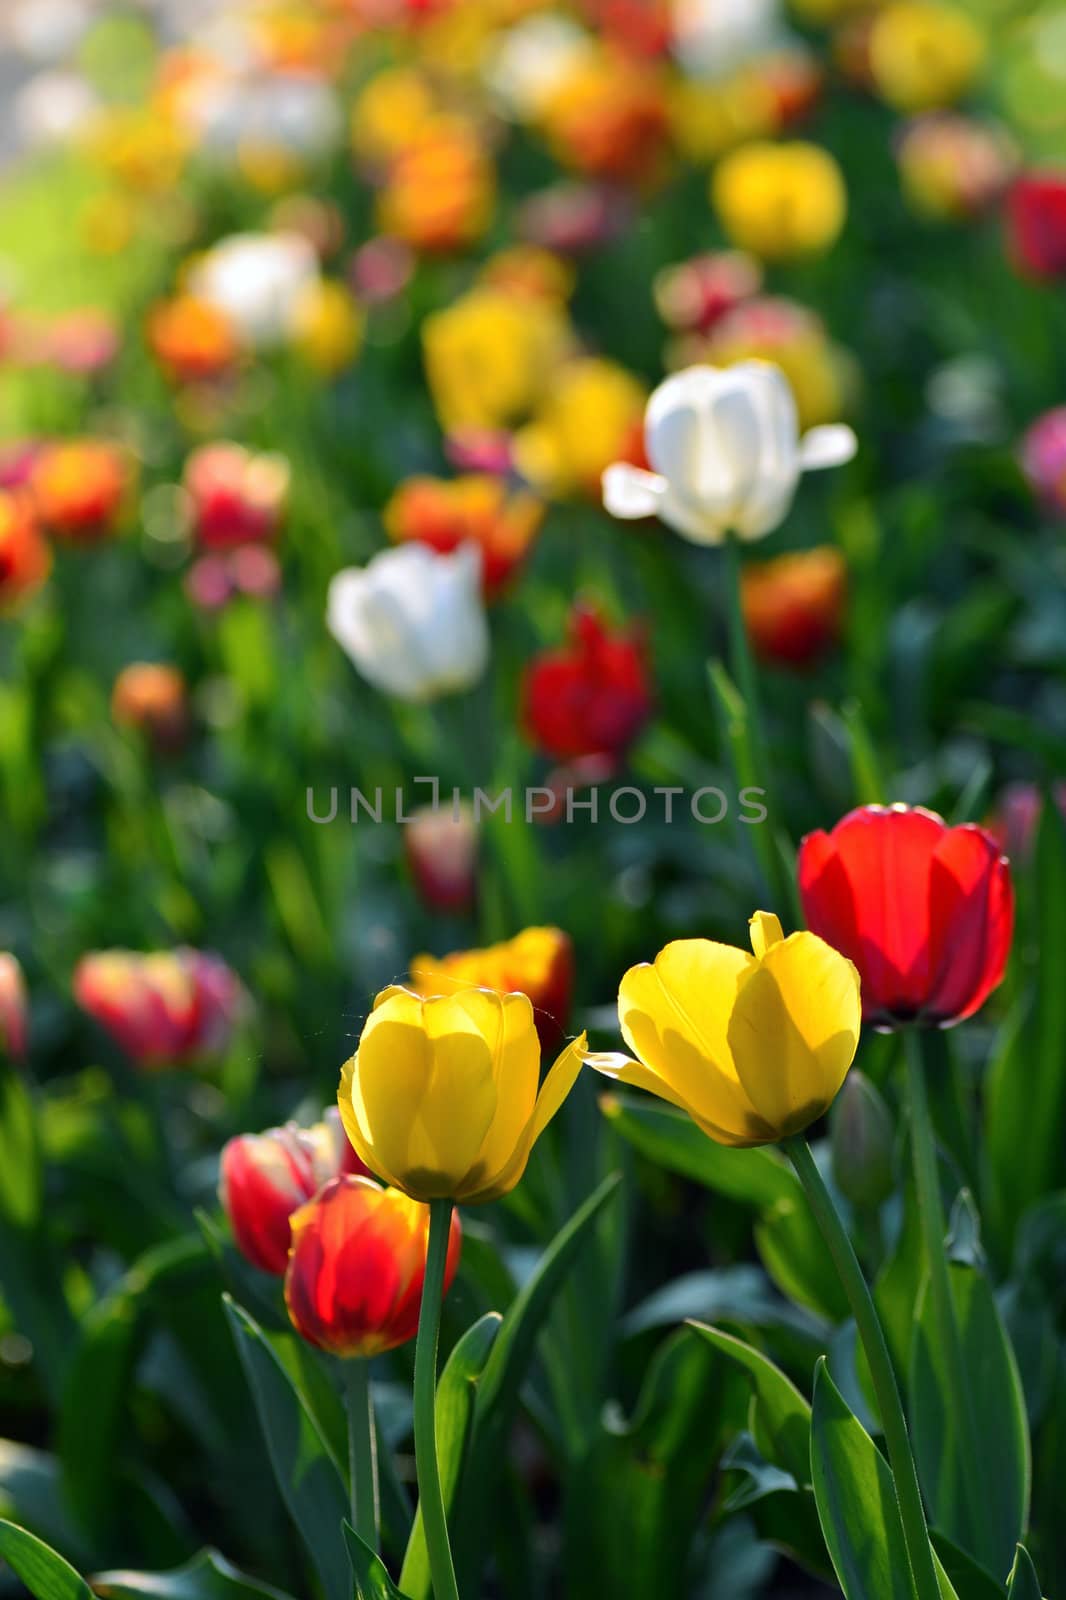 Tulips by Vectorex